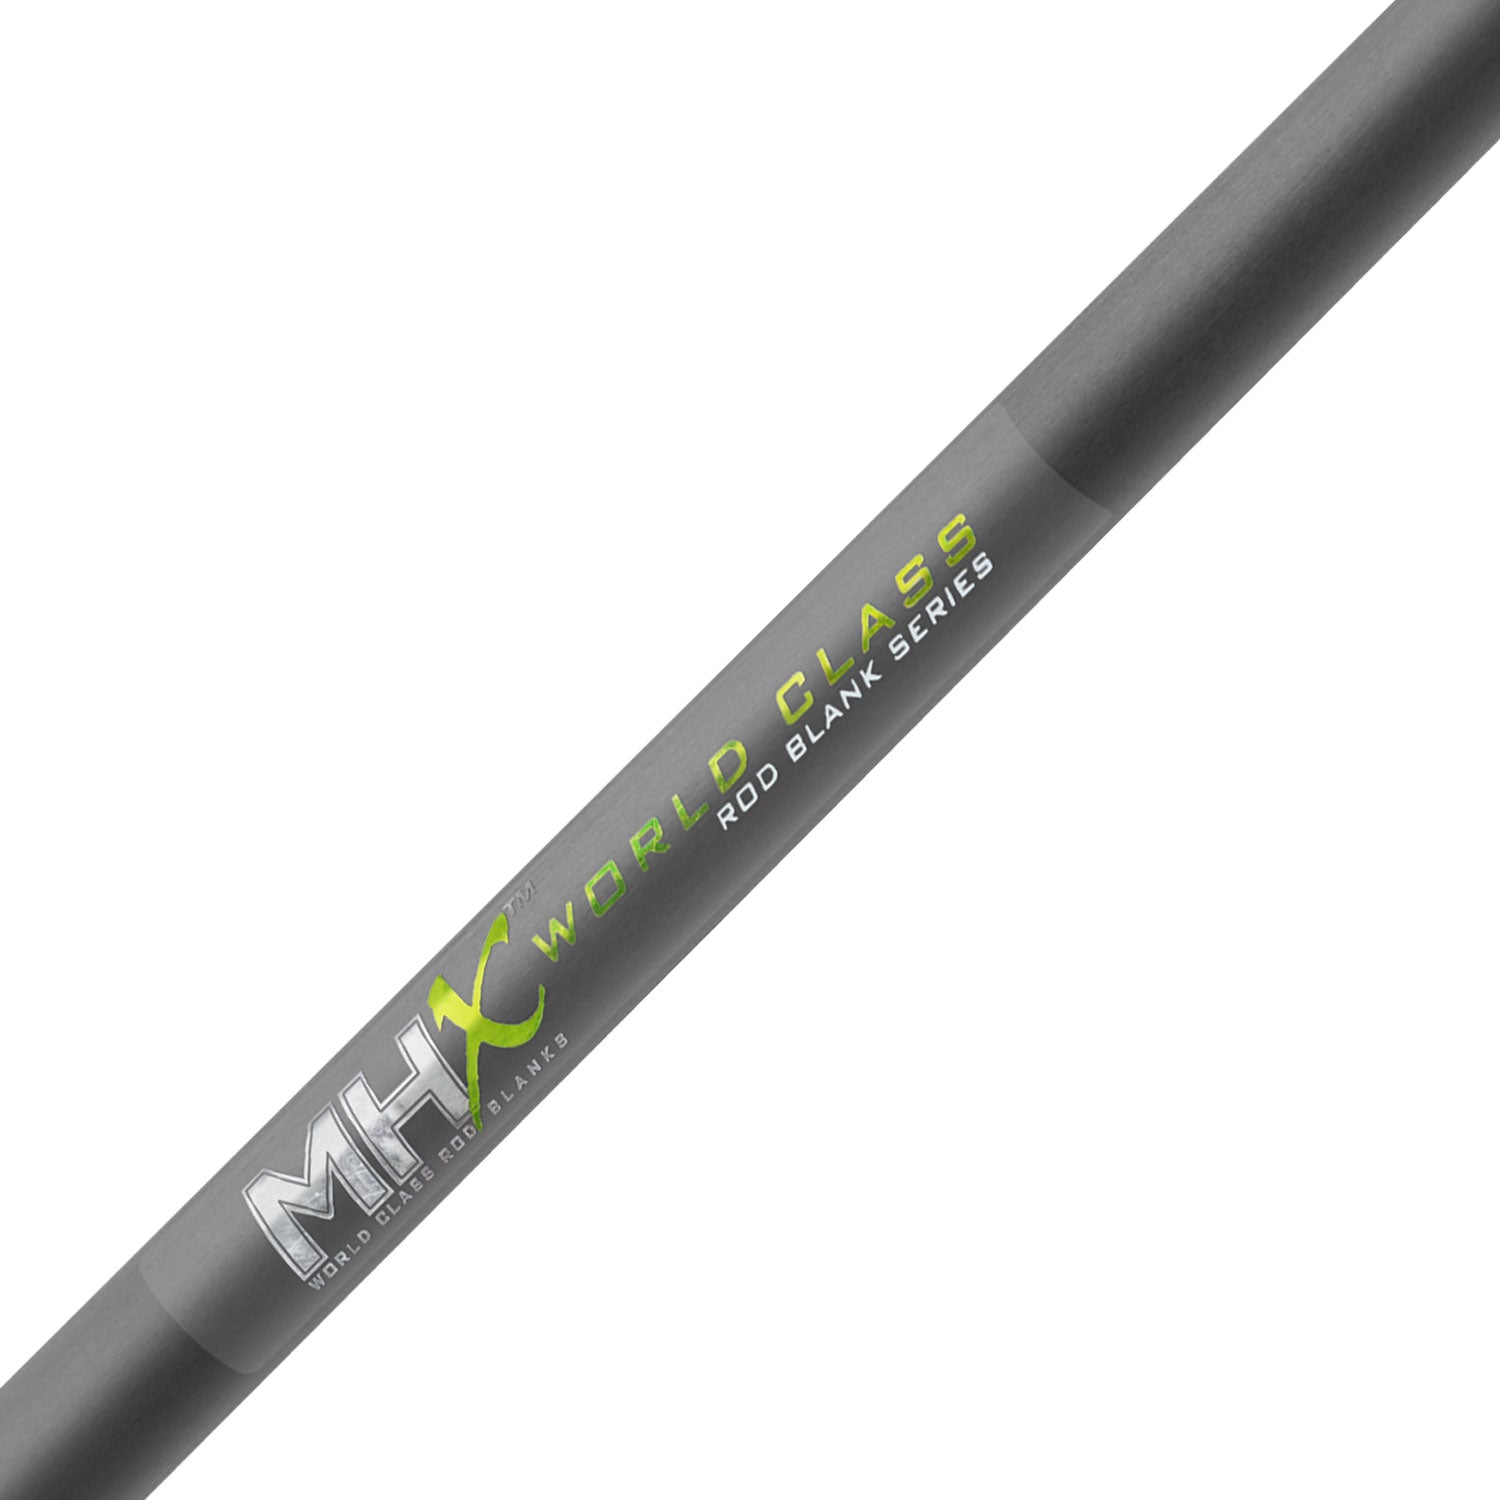 MHX 7'6" X-Heavy Flipping Stick Rod Blank - FS906-MHX